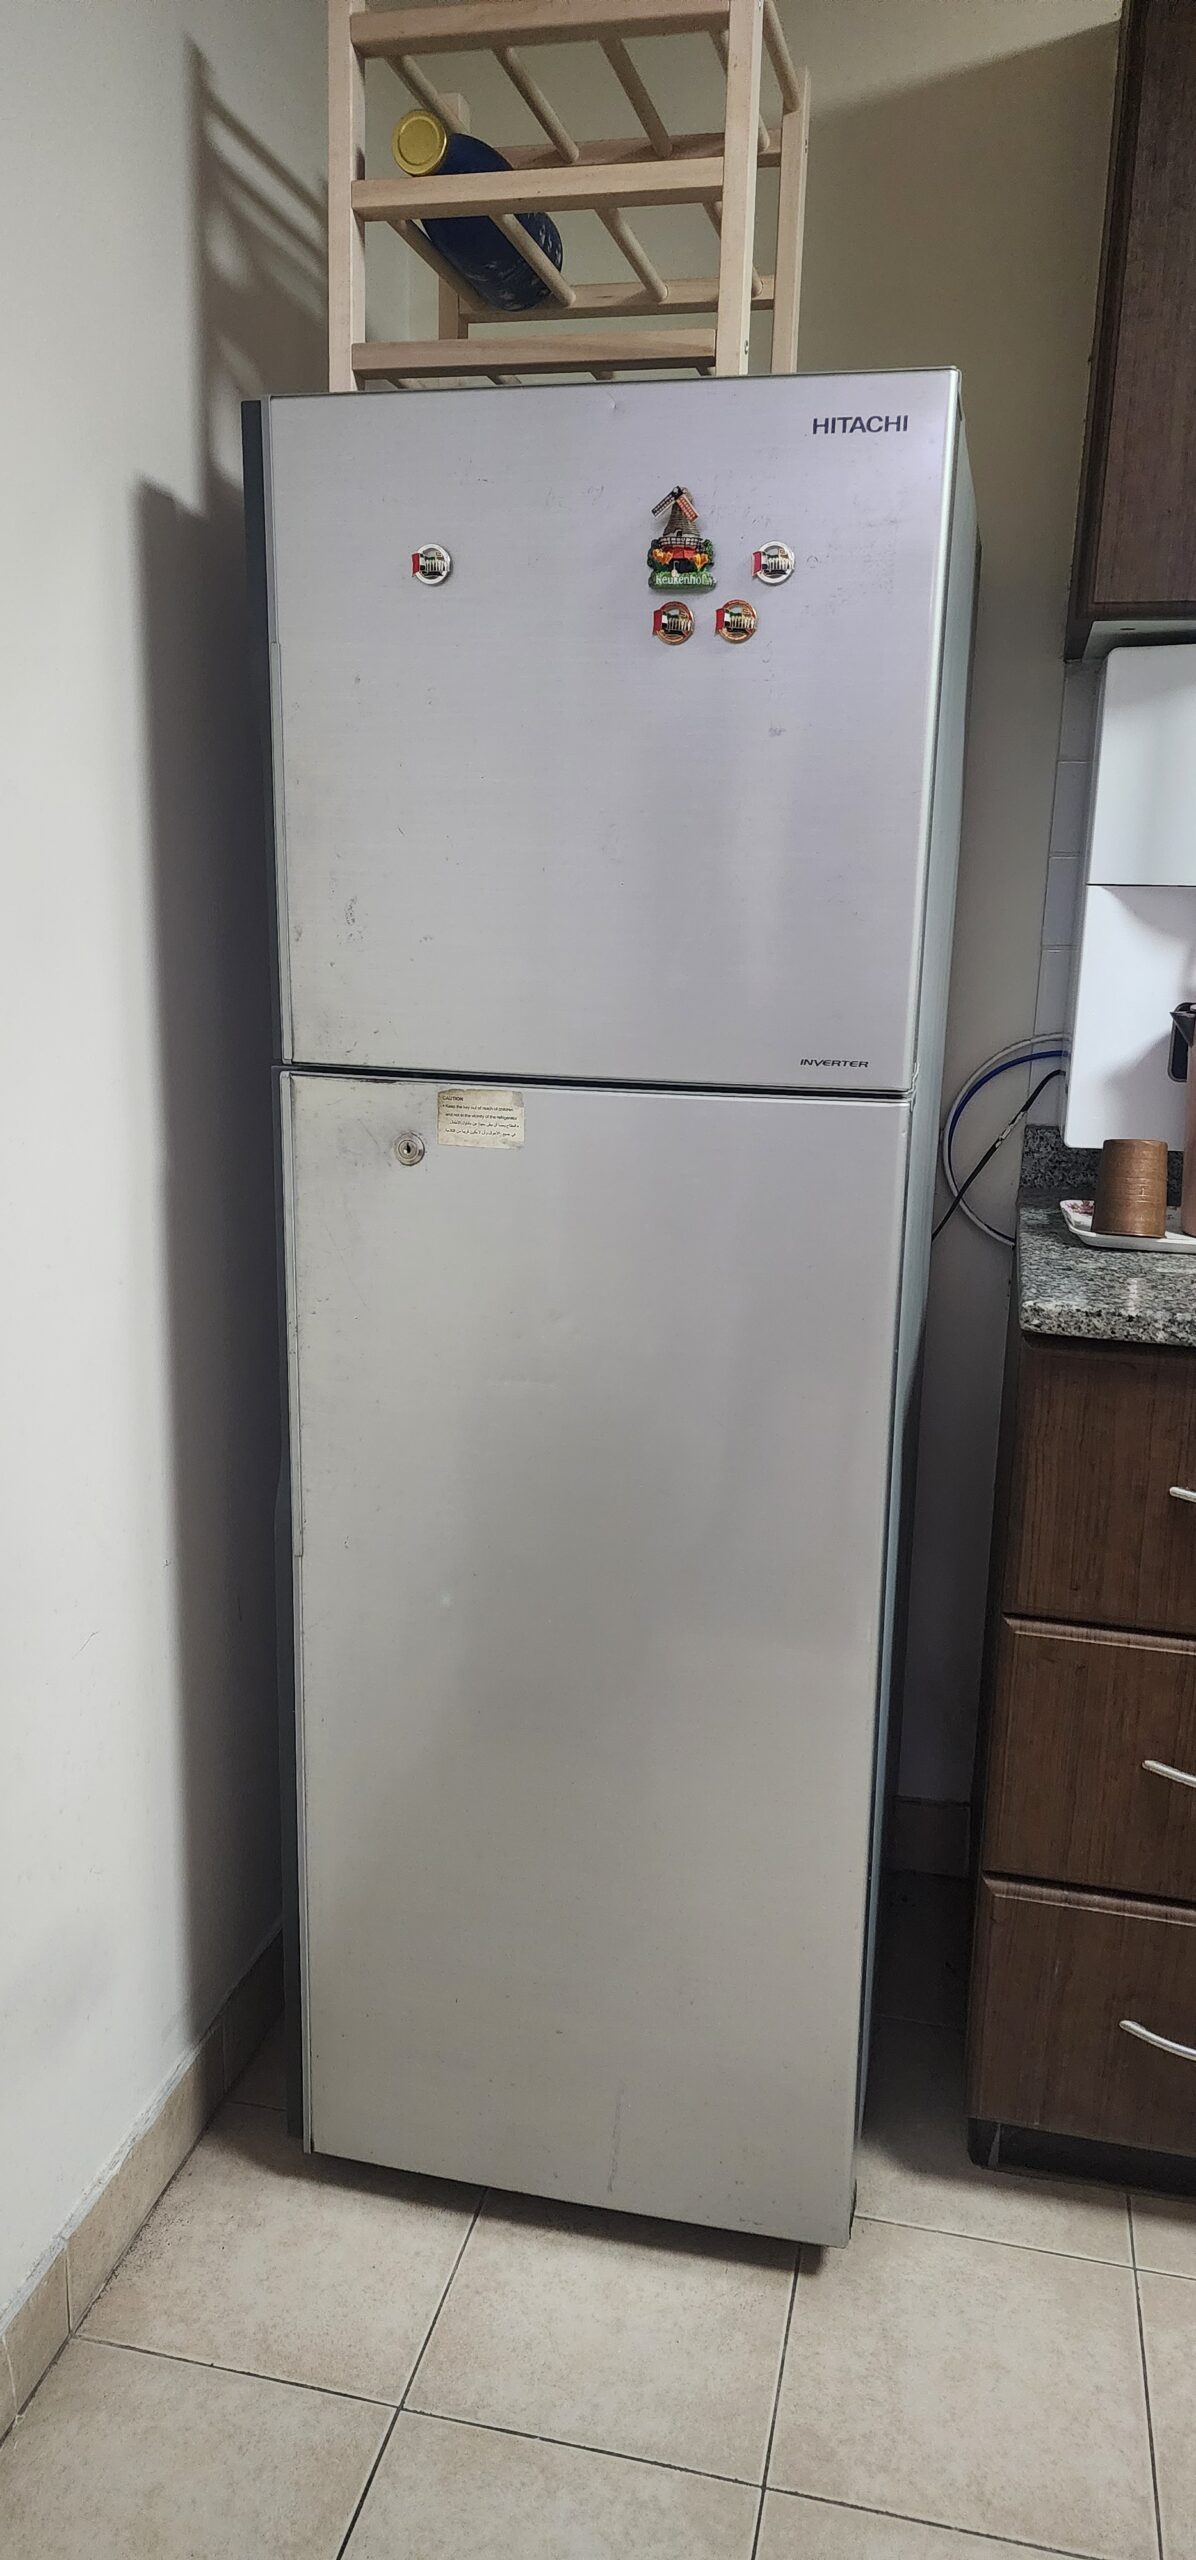 Hitachi Refrigerator for sale in JVC